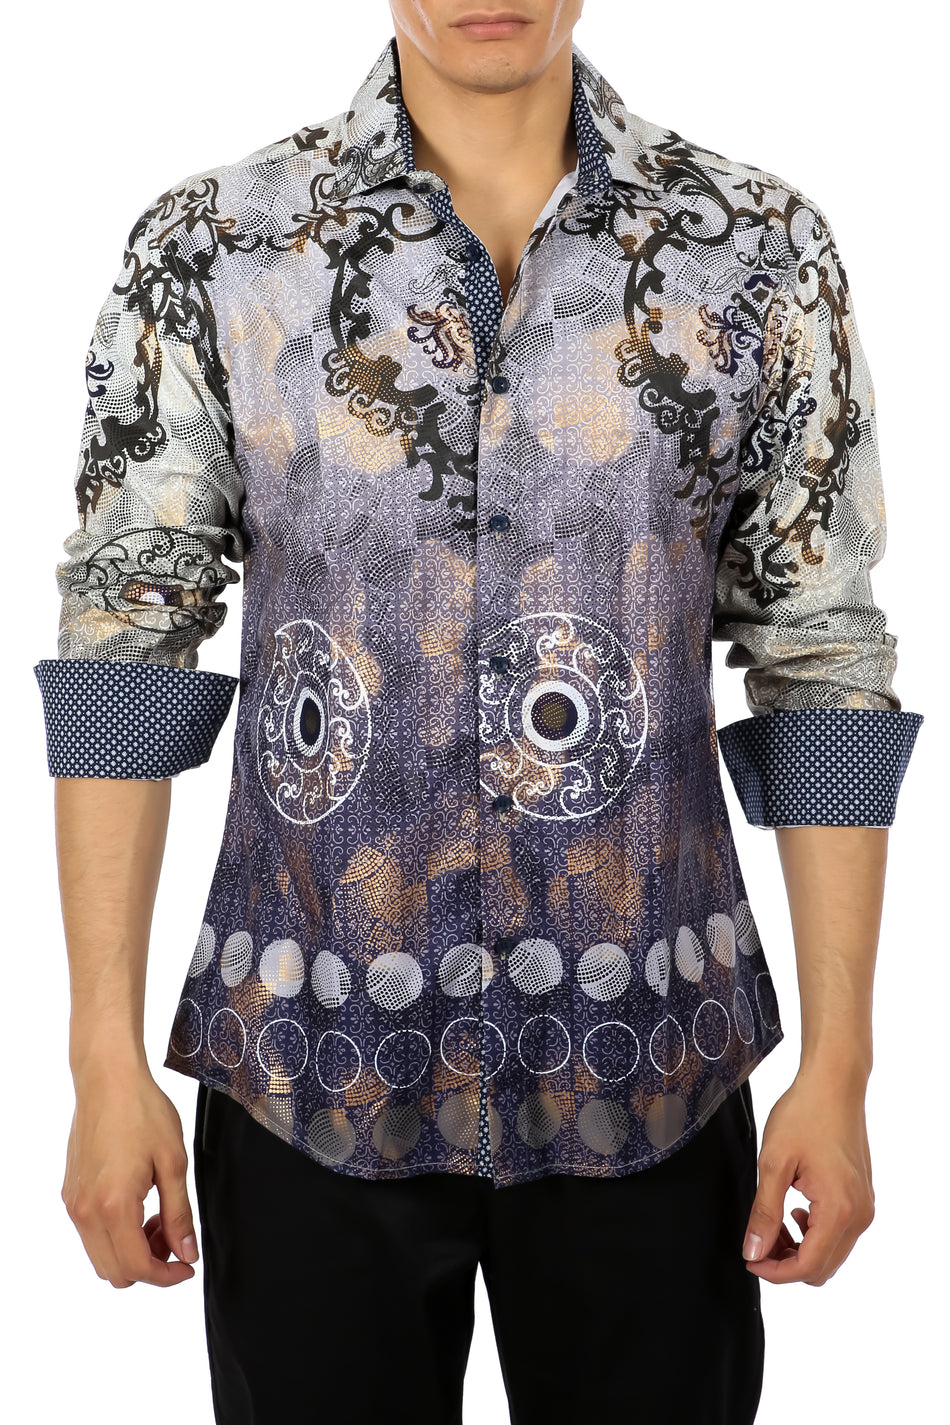 Paisley Moon Cycle Button Up Long Sleeve Dress Shirt